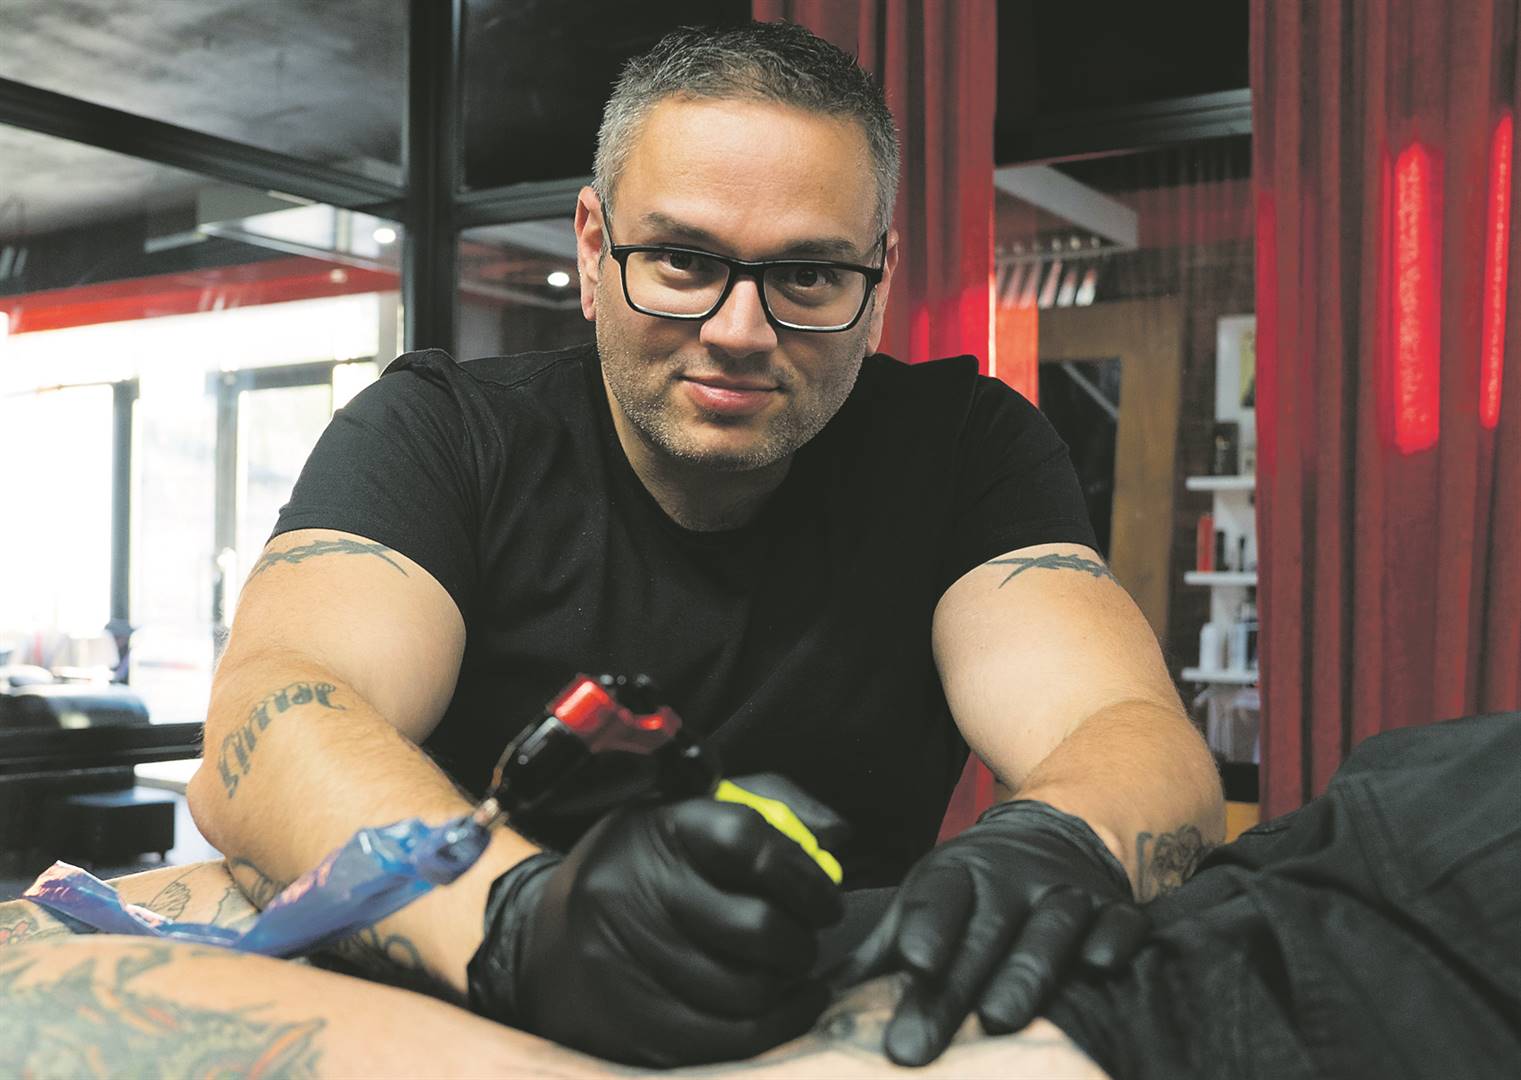 Big ink stink tattoo plan leaves poor impression